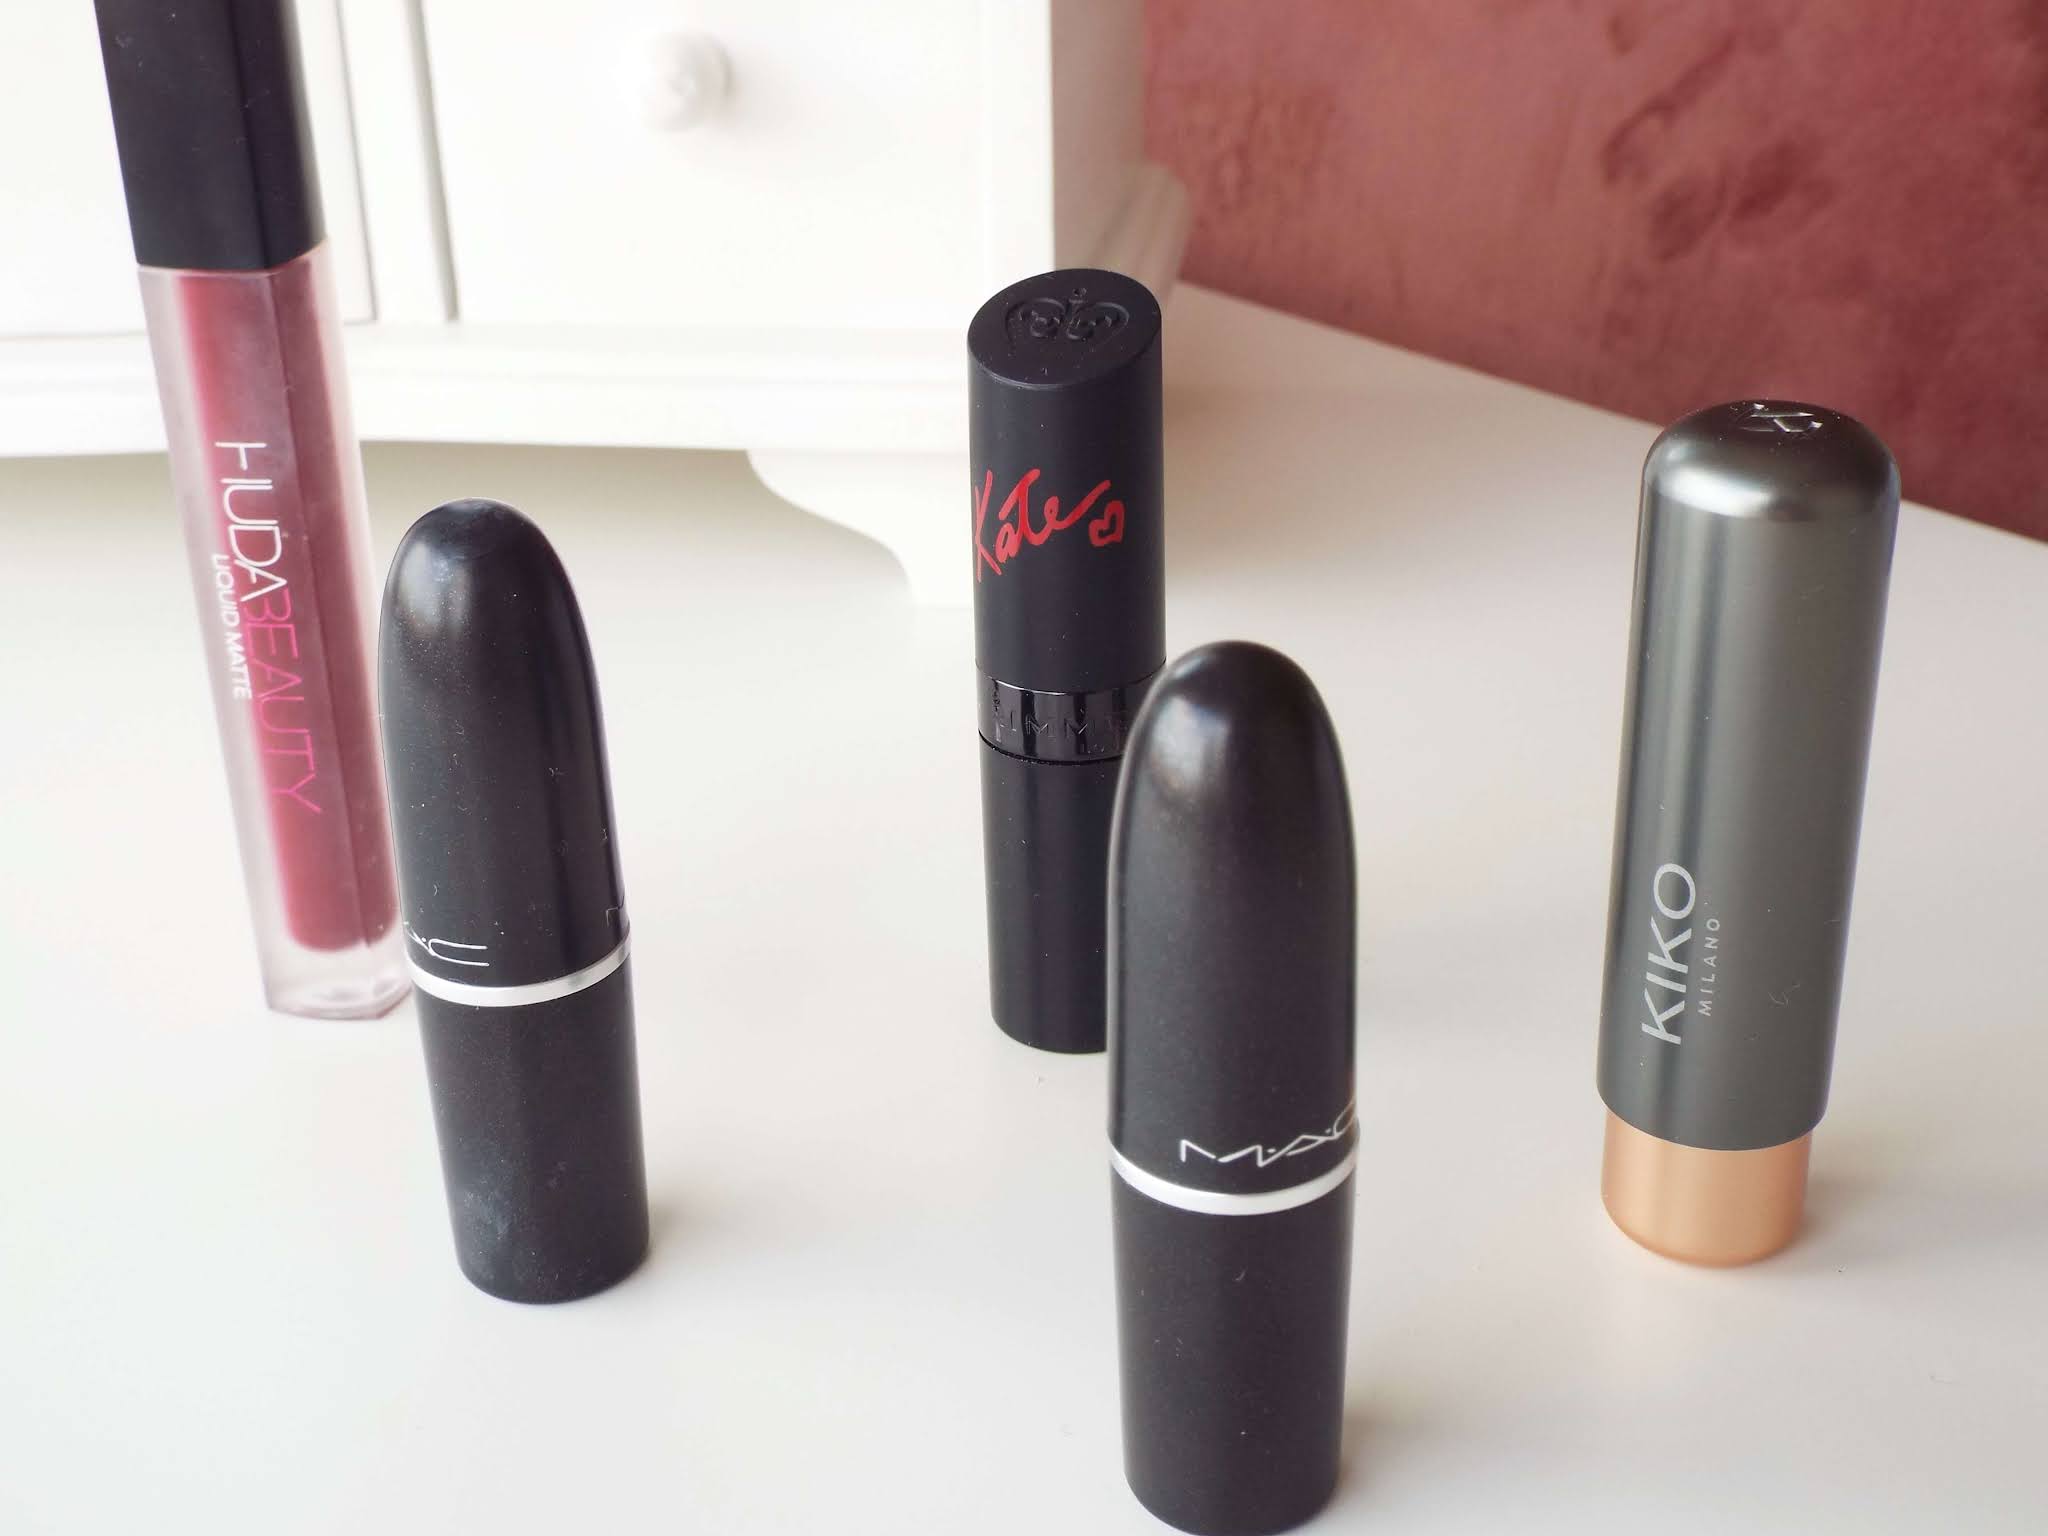 The five lipsticks, Huda Beauty, MAC, Rimmel and Kiko lined up together.